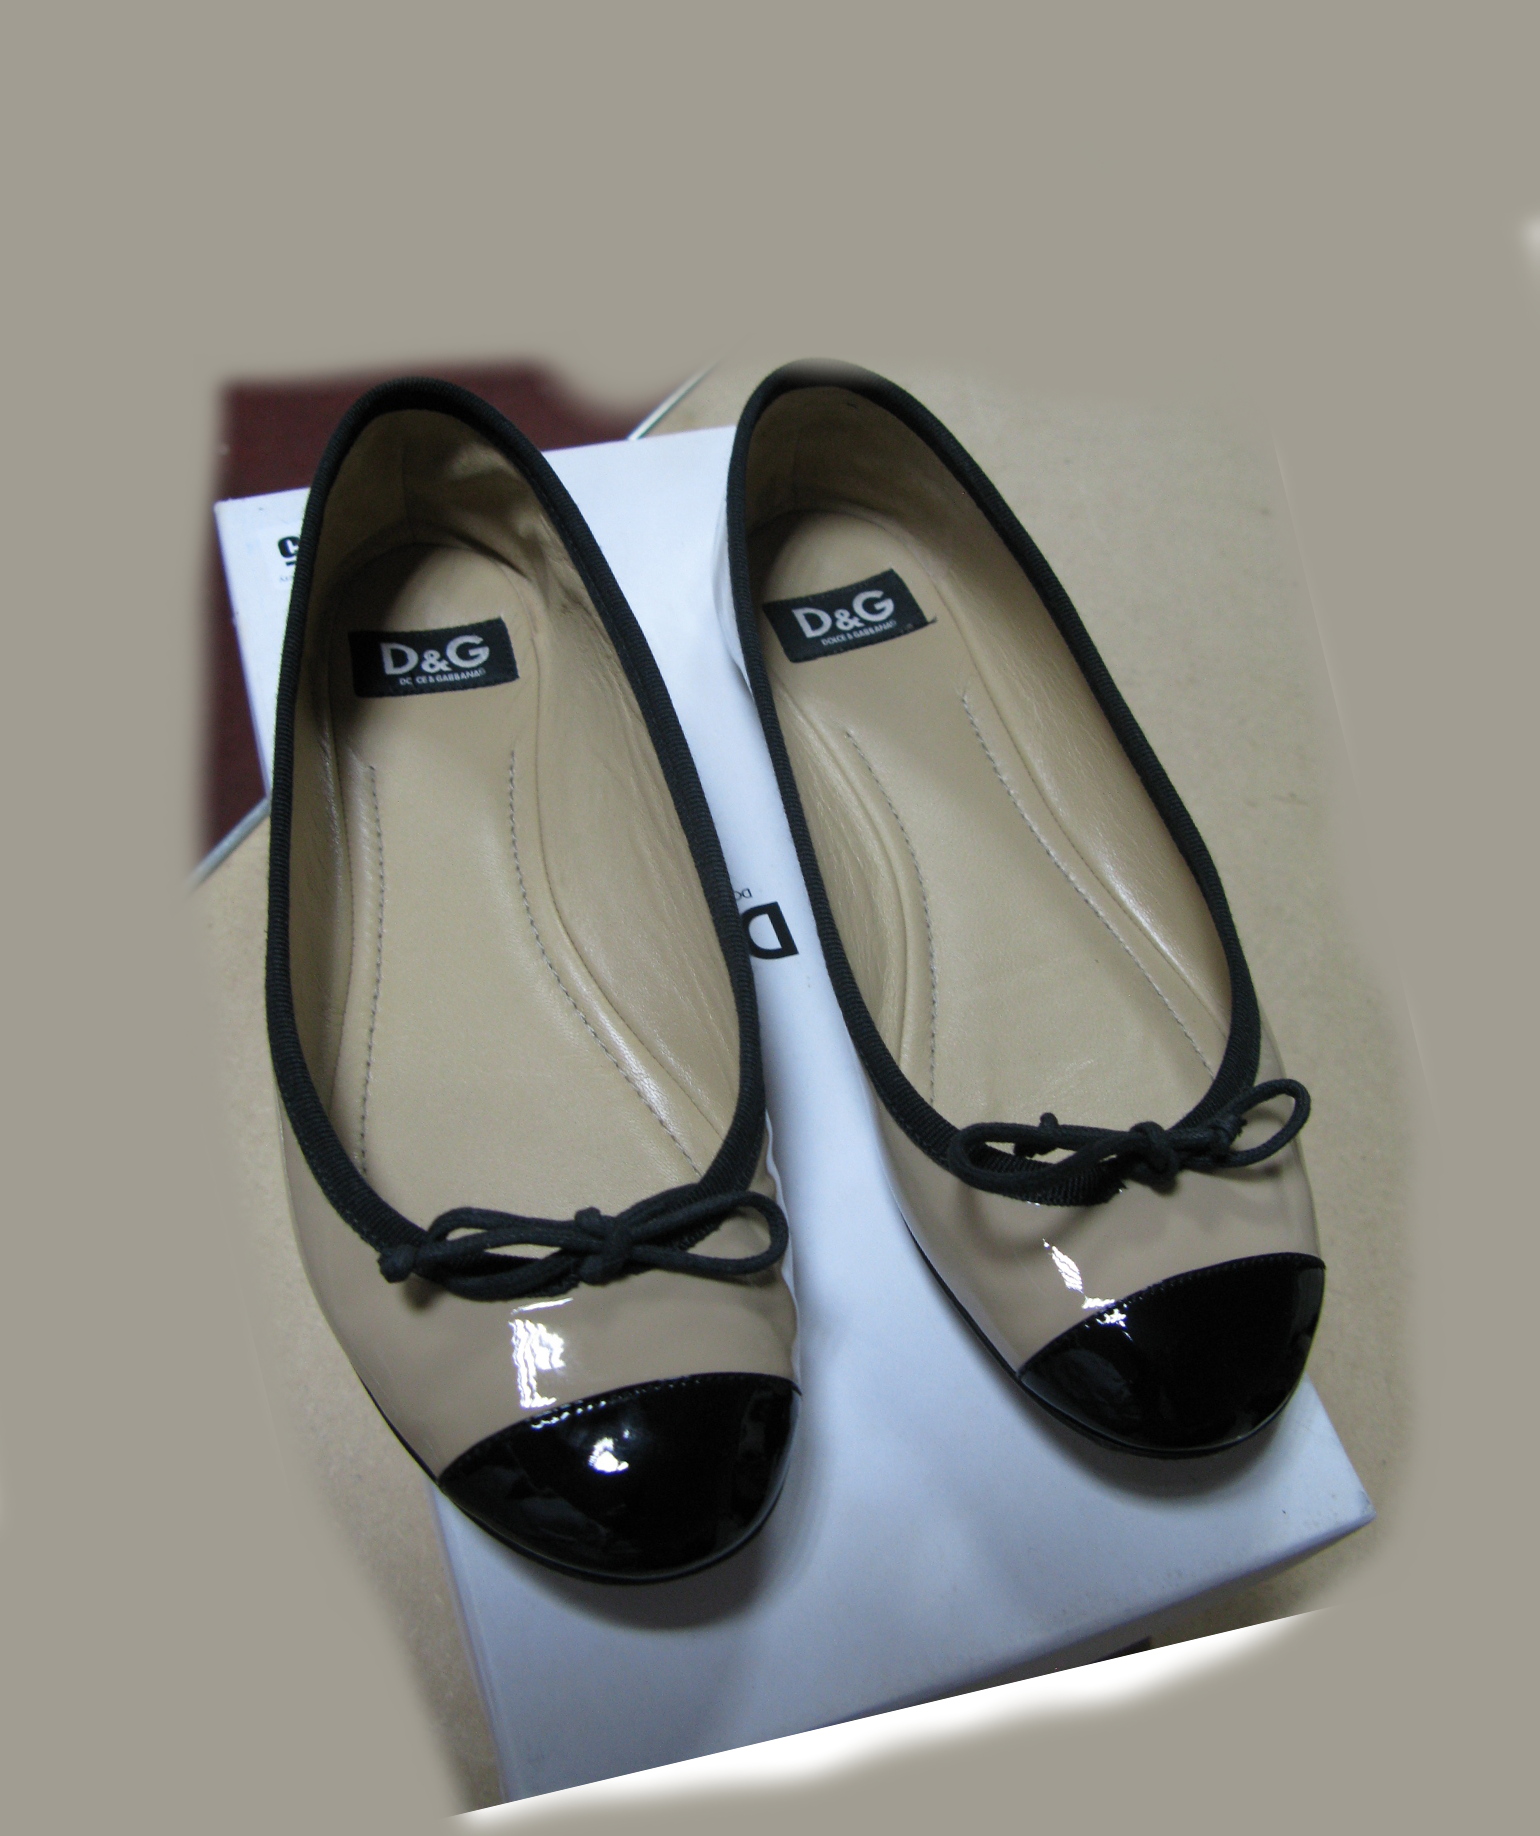 Dolce & Gabbana - A pair of Martinex Toe Cap beige patent ladies ballerinas/shoes, size 36 (UK 4),